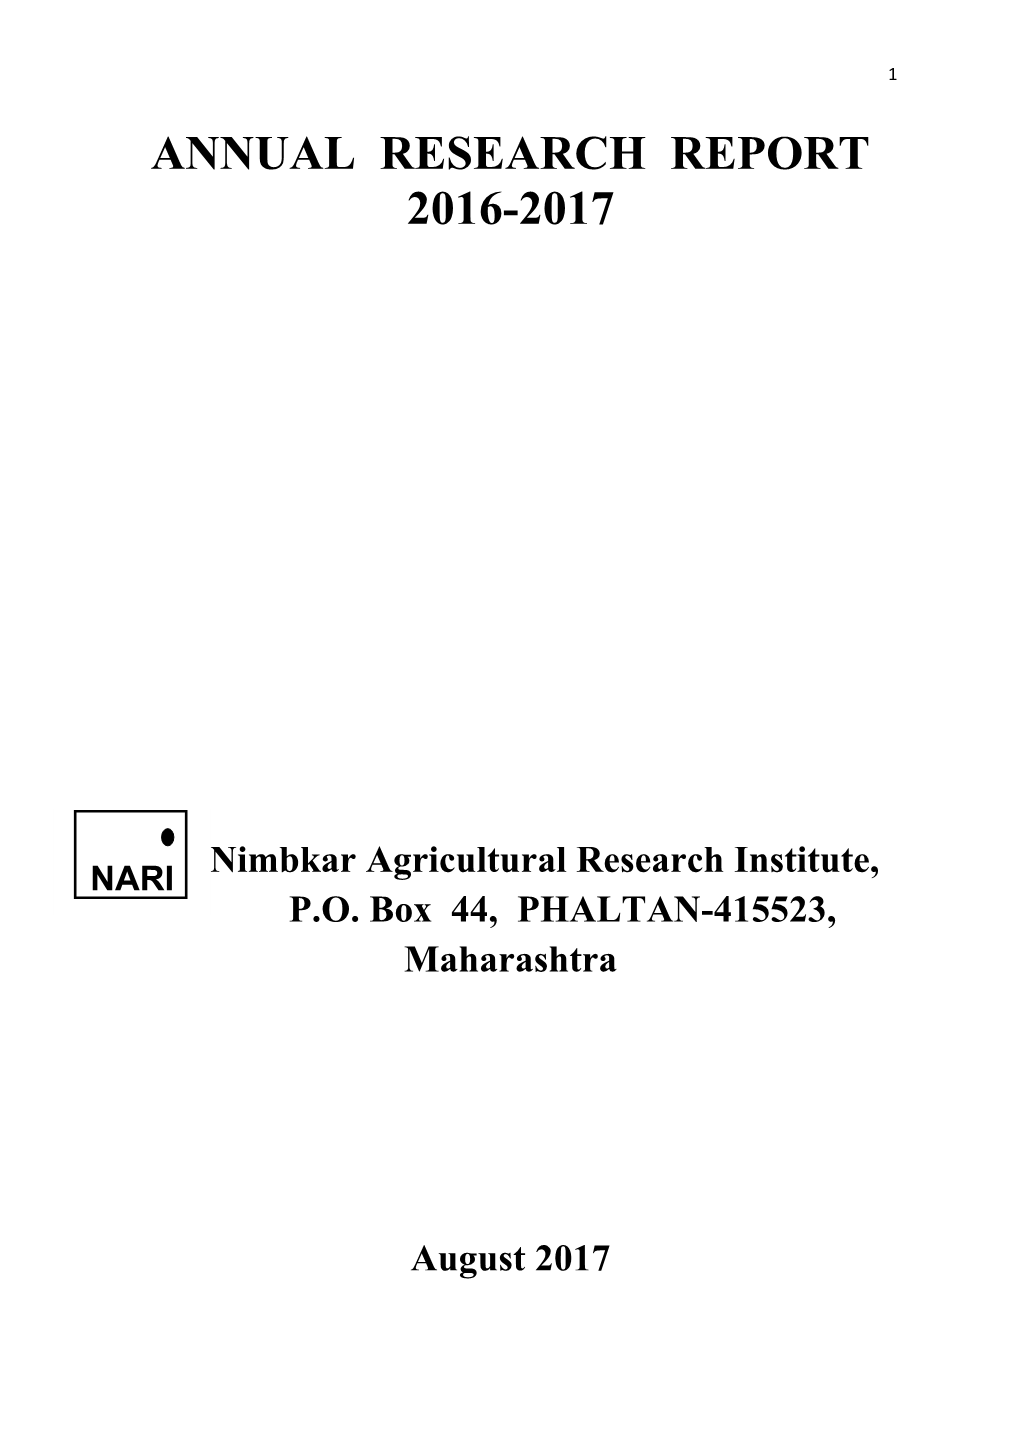 NARI Annual Research Report 2016-17